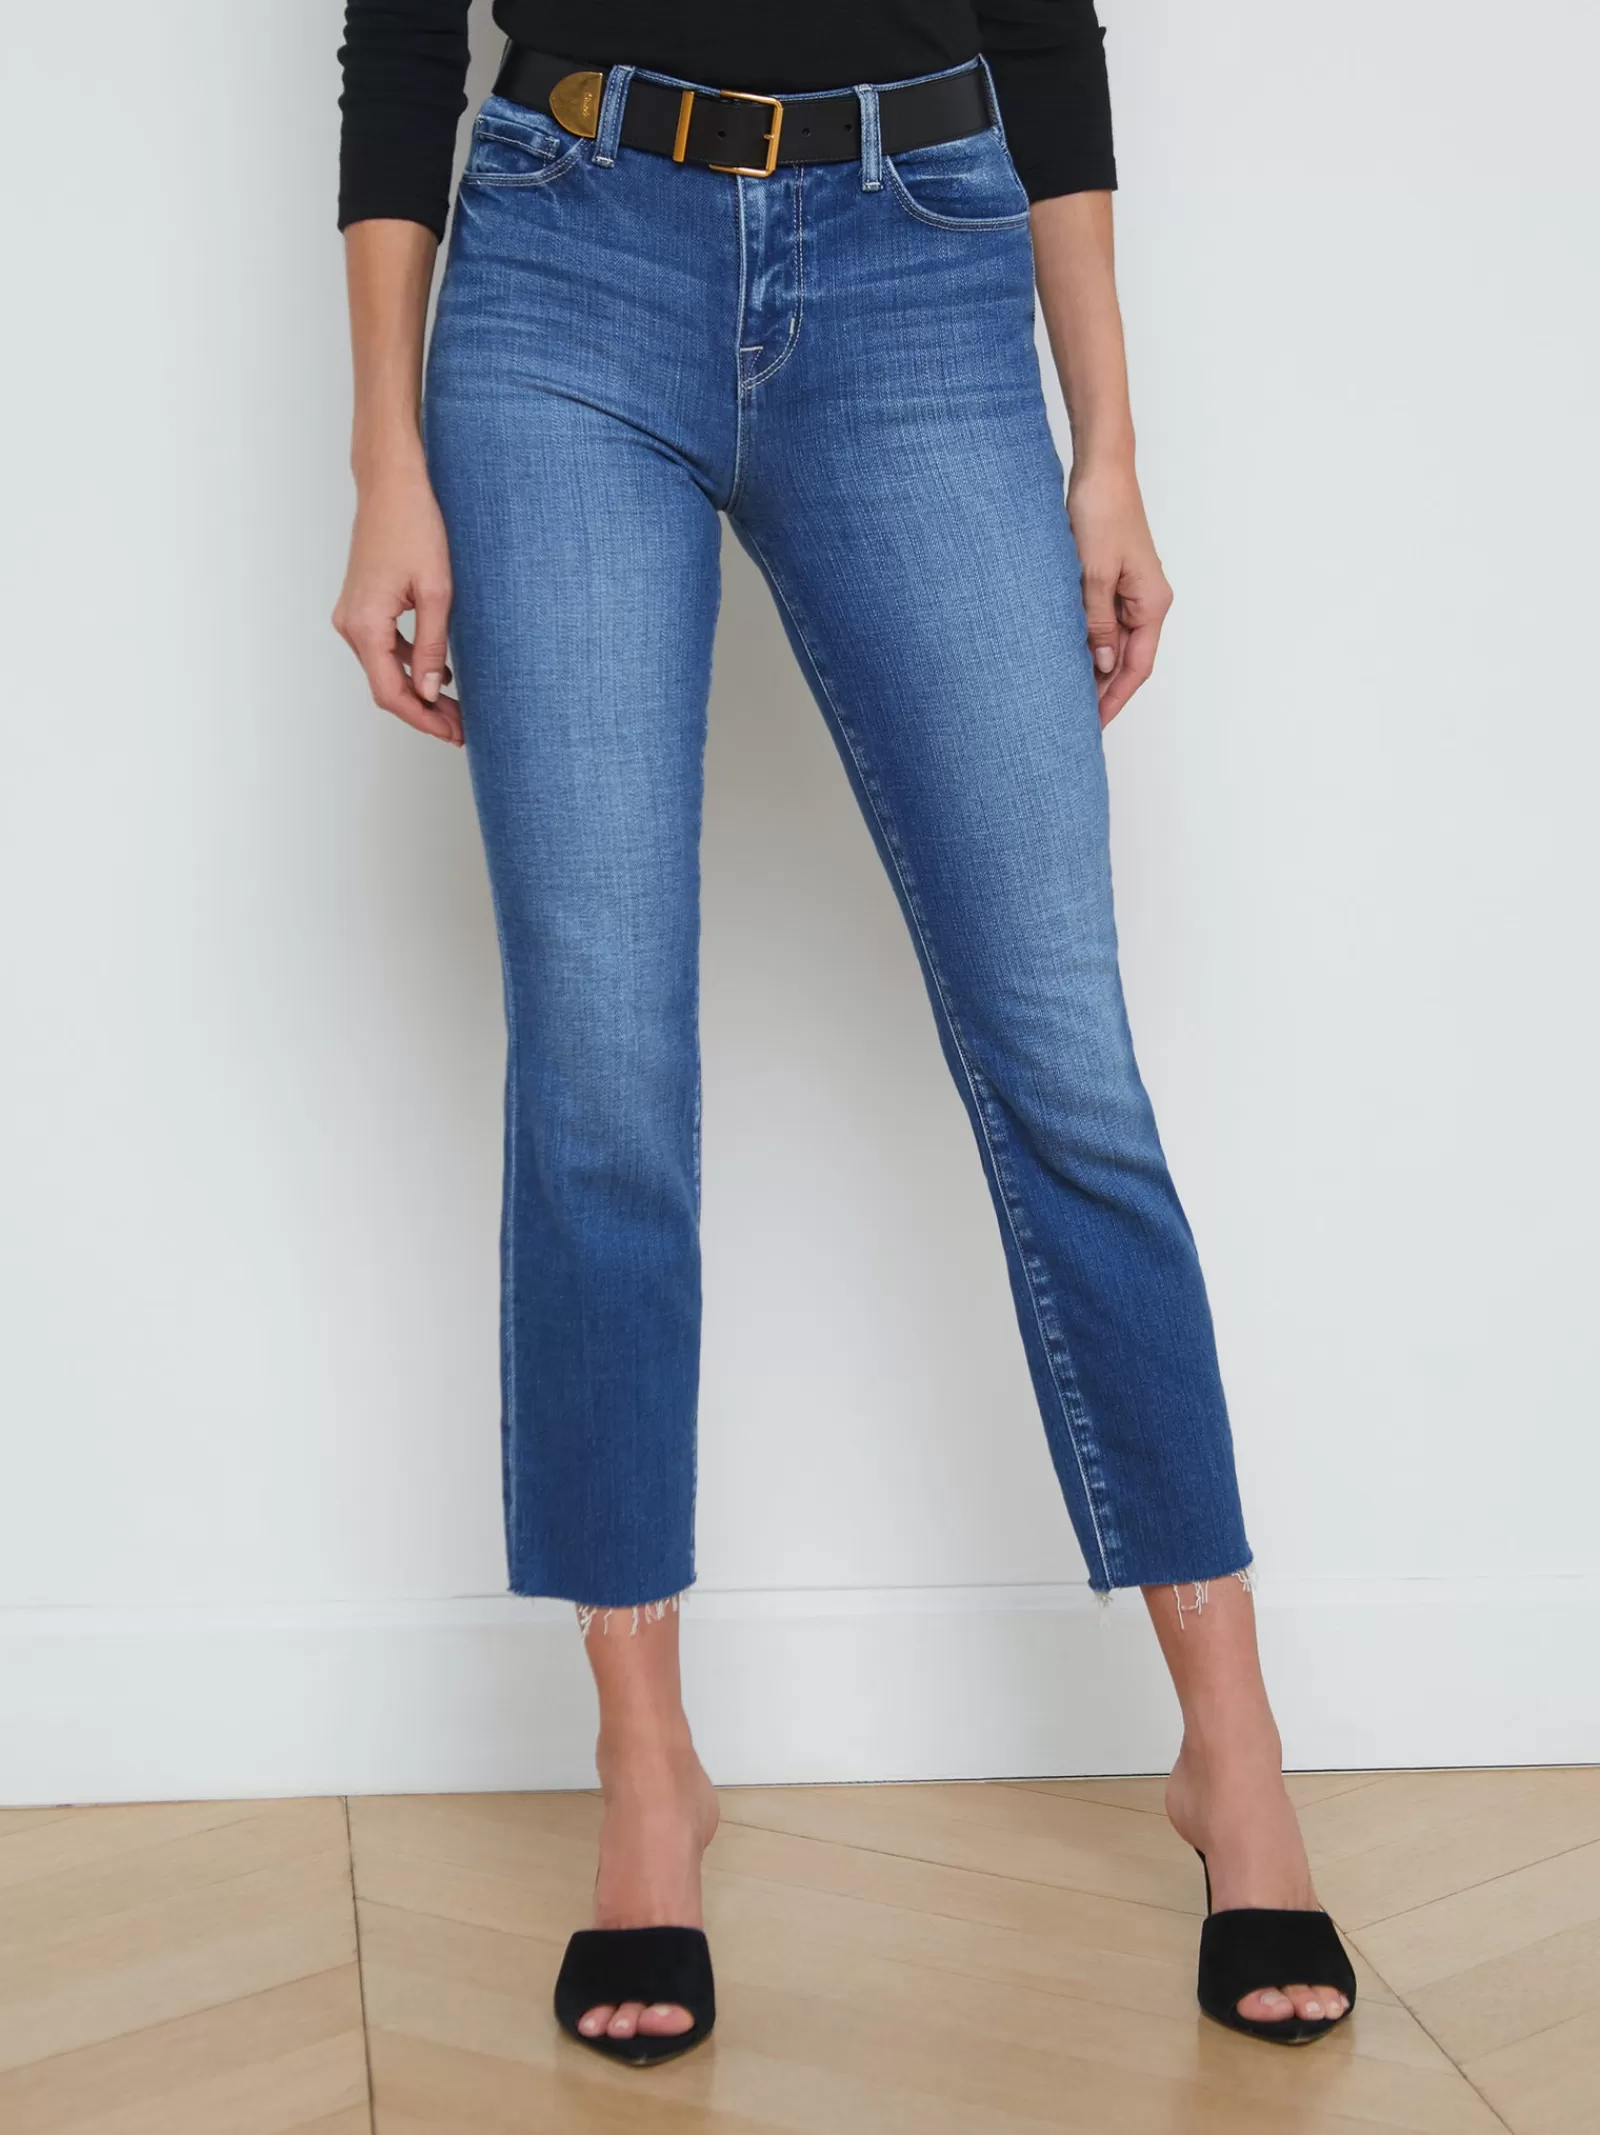 L'AGENCE Sada Slim-Leg Cropped Jean< Spring Collection | Petite